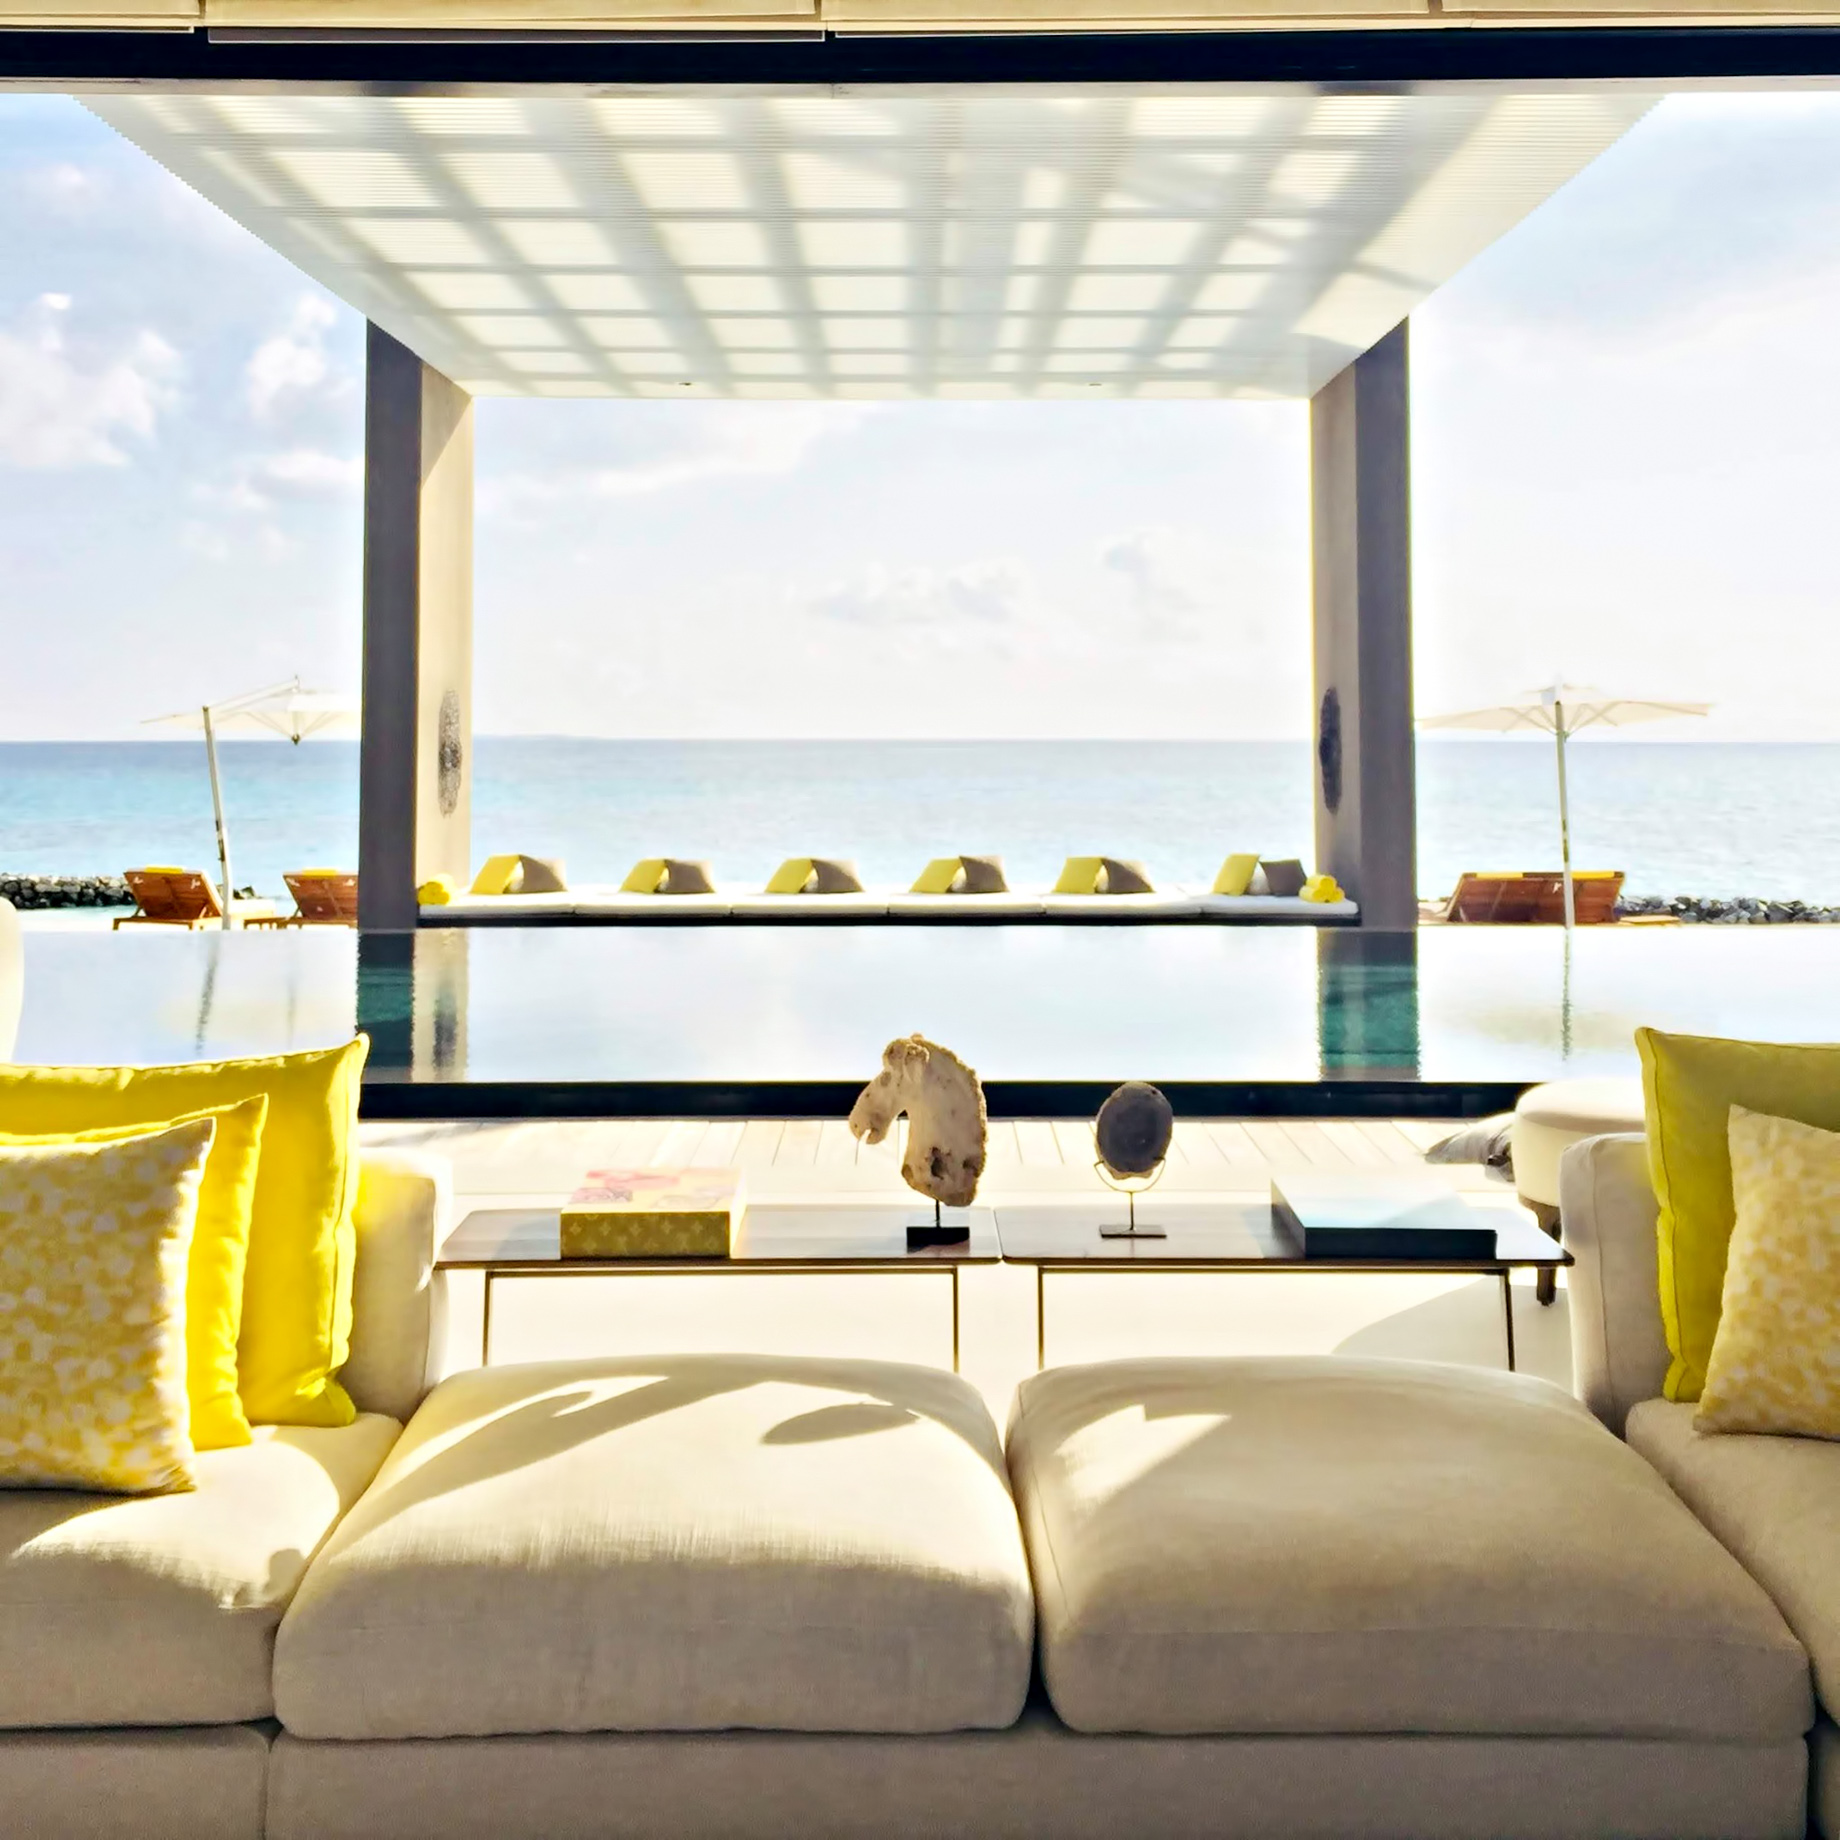 Cheval Blanc Randheli Resort - Noonu Atoll, Maldives - Infinity Pool Ocean View